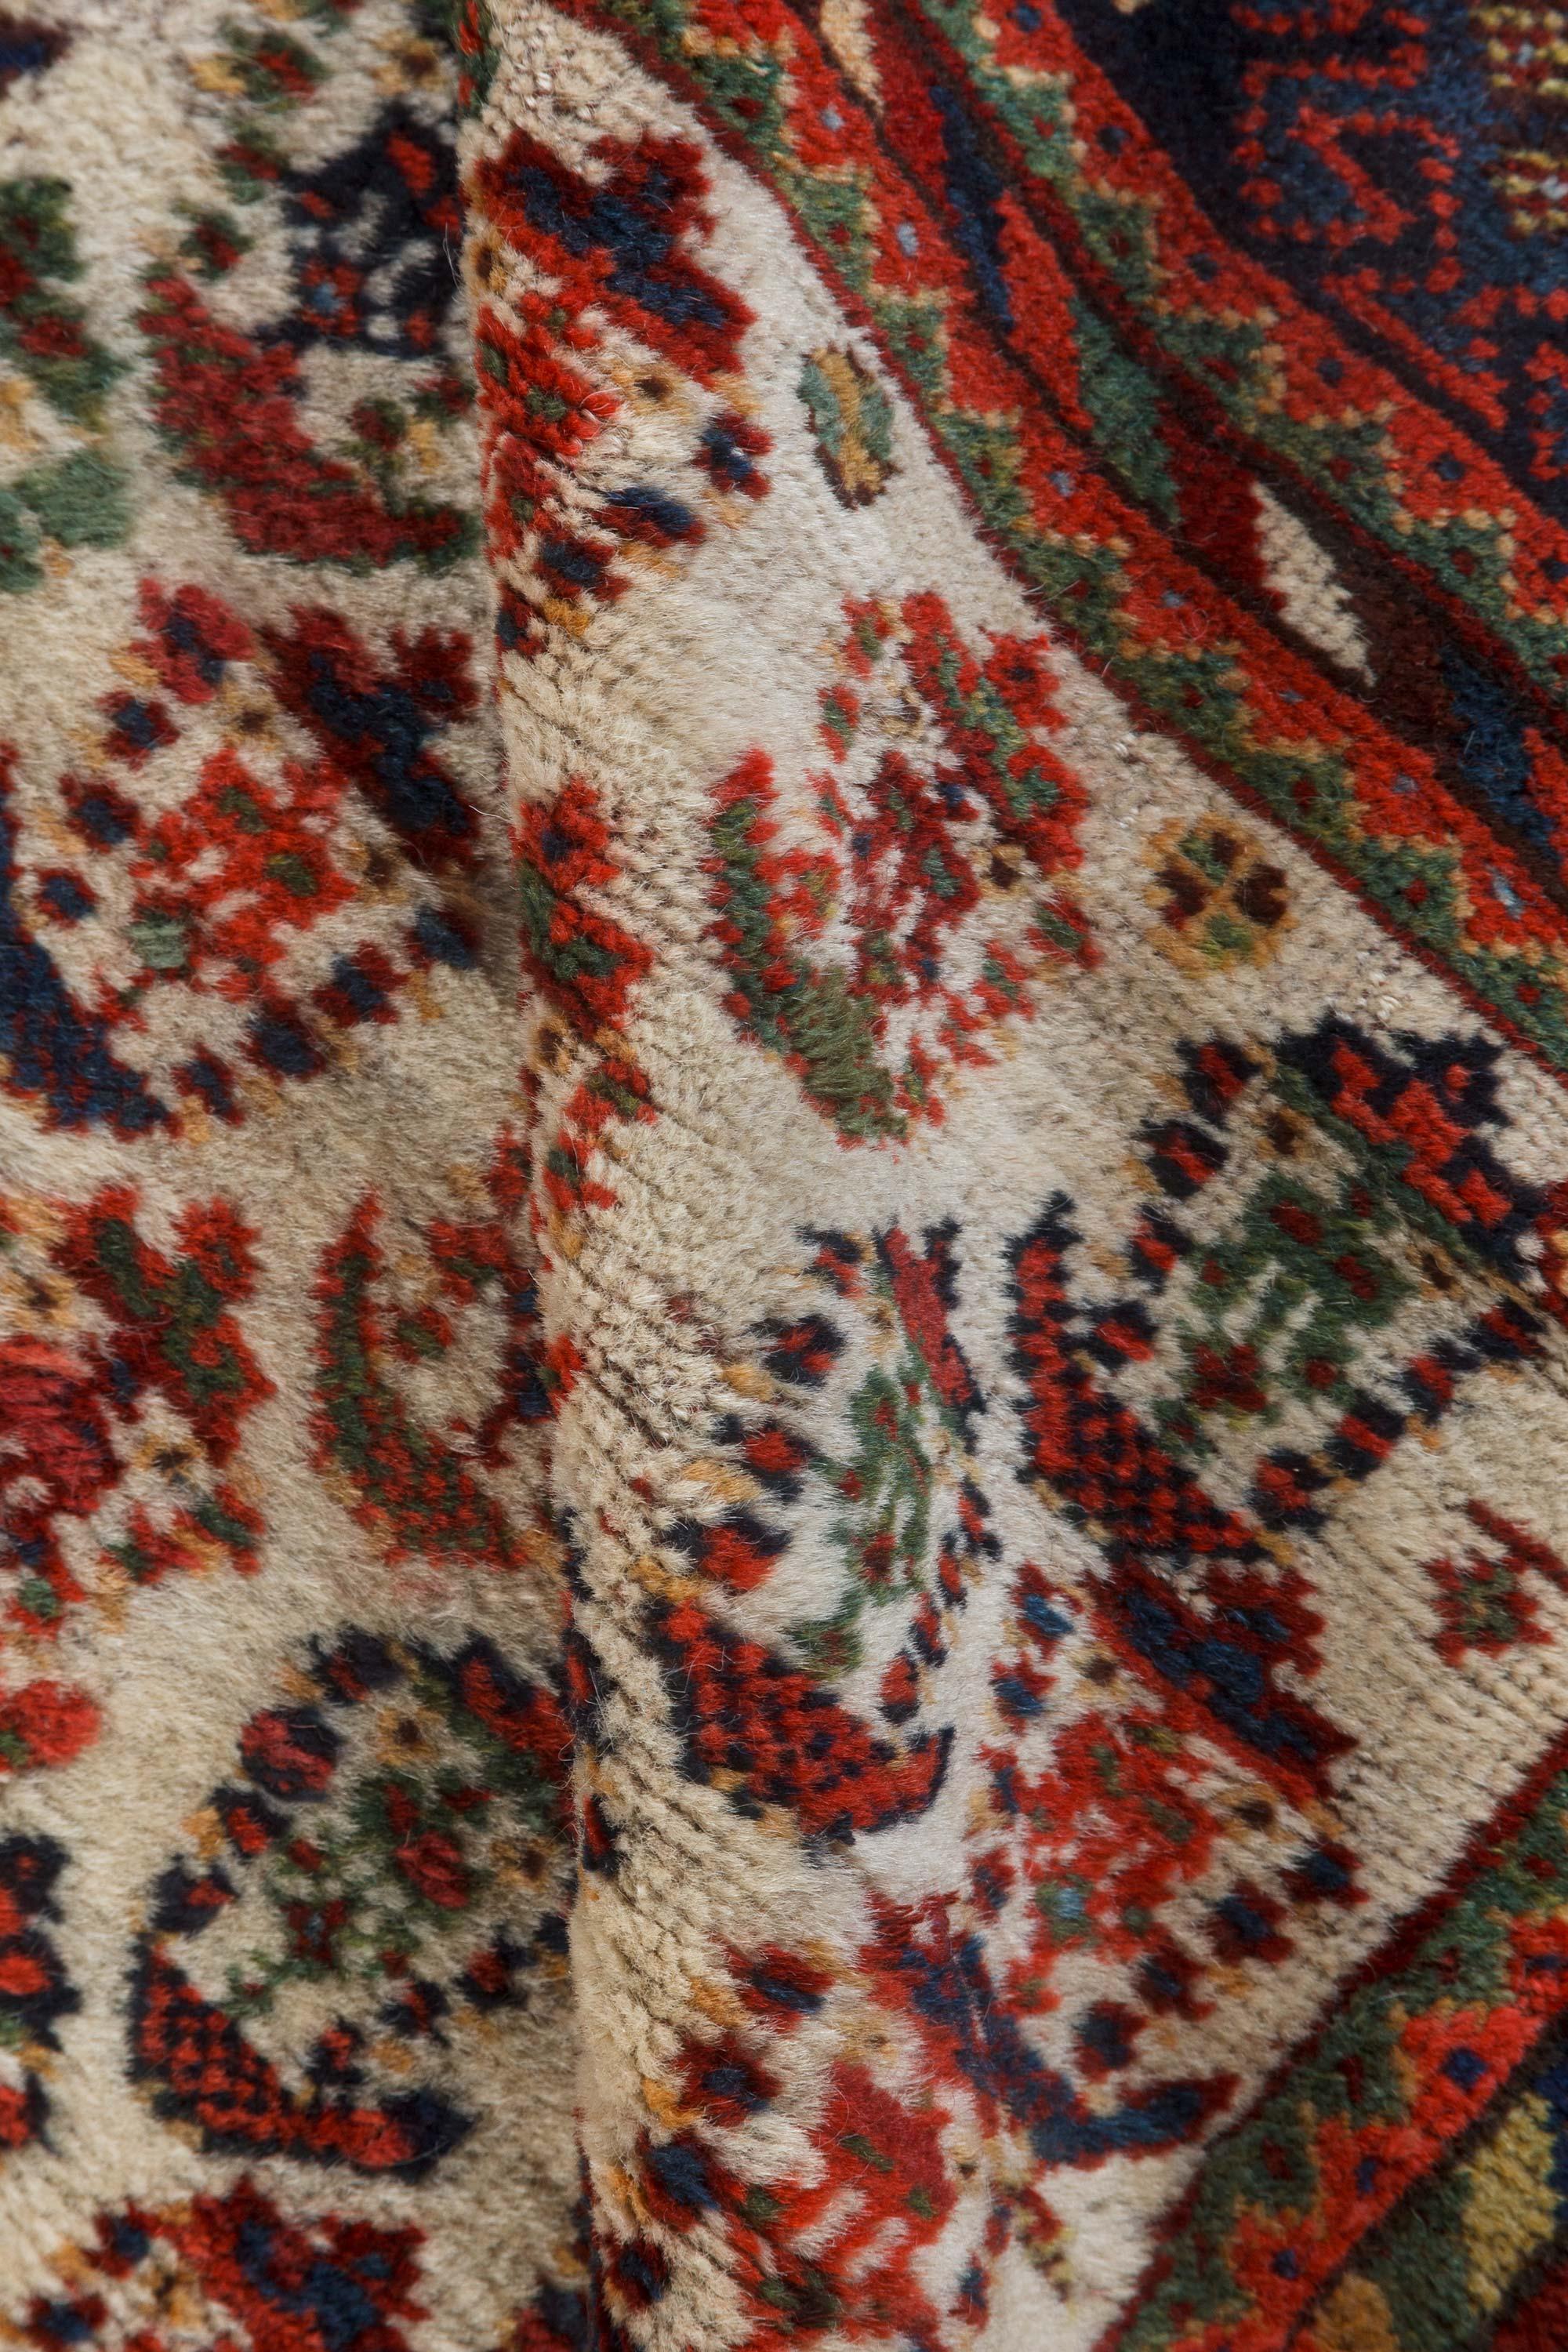 Authentique tapis persan Afshar bleu, marron, vert, rouge, blanc.
Taille : 5'3